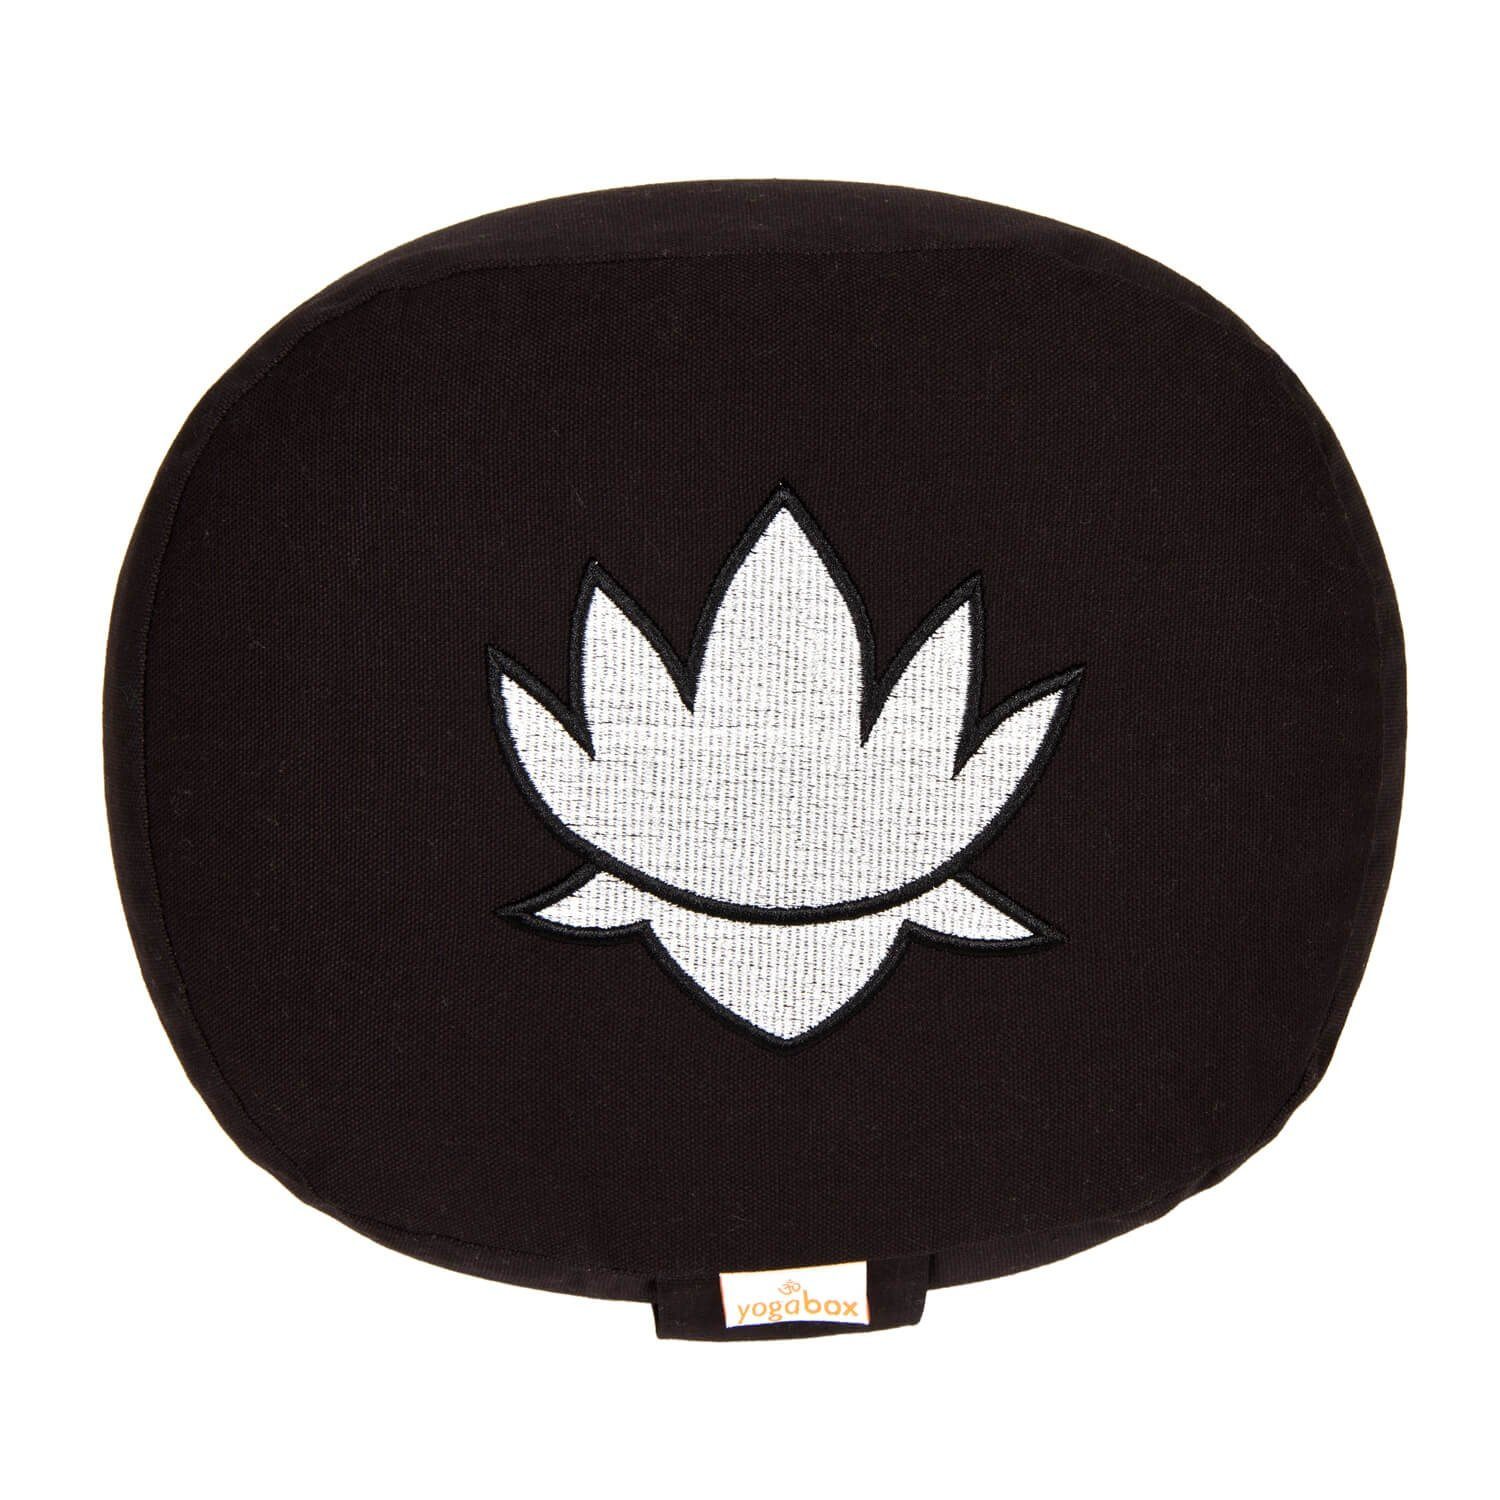 yogabox Yogakissen oval Lotus Stick BASIC schwarz